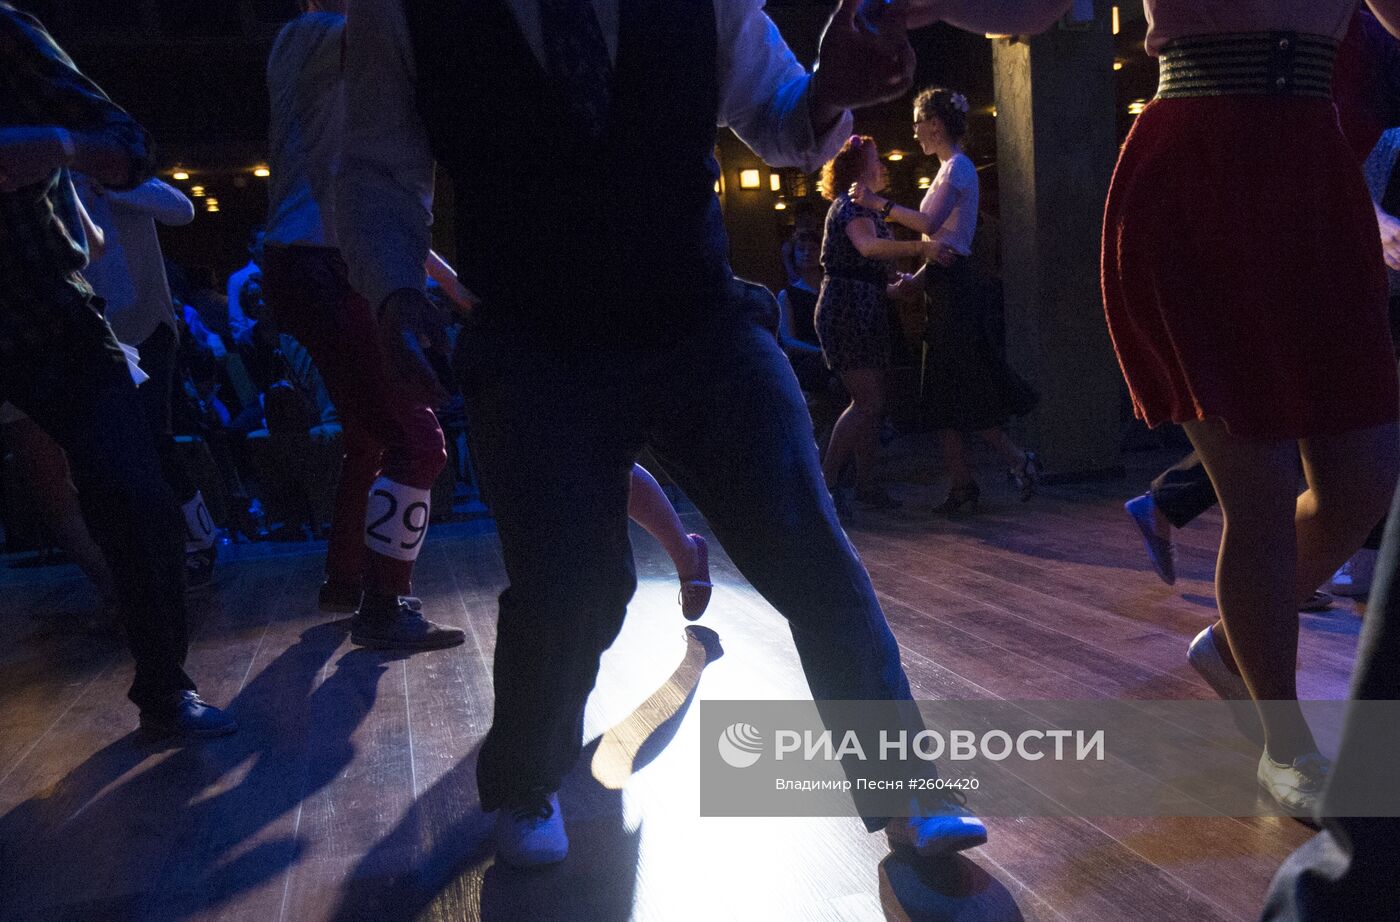 Кубок МСДК 2015 по линди хопу в Москве